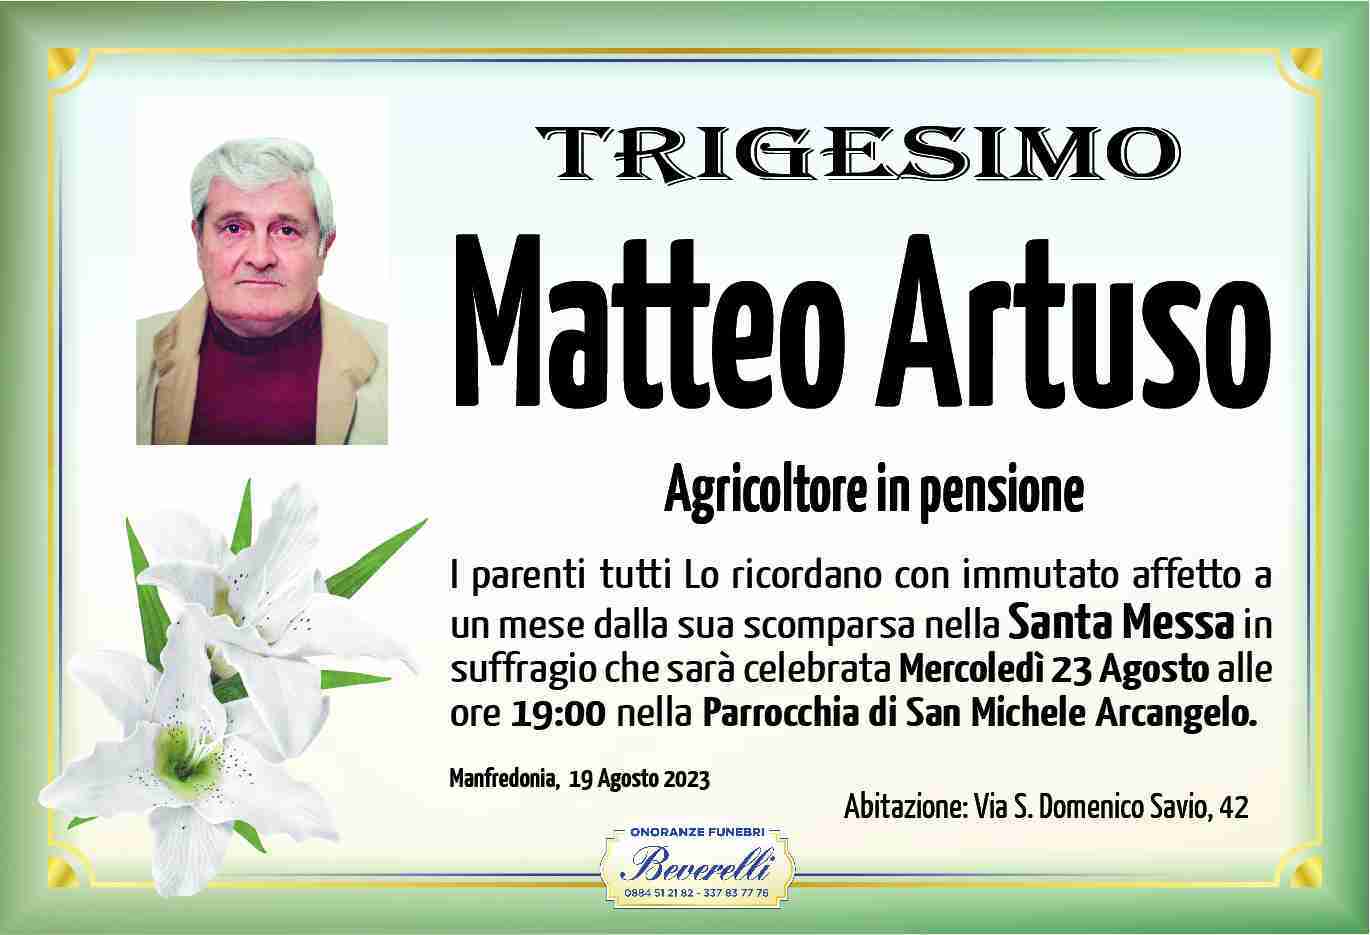 Matteo Artuso